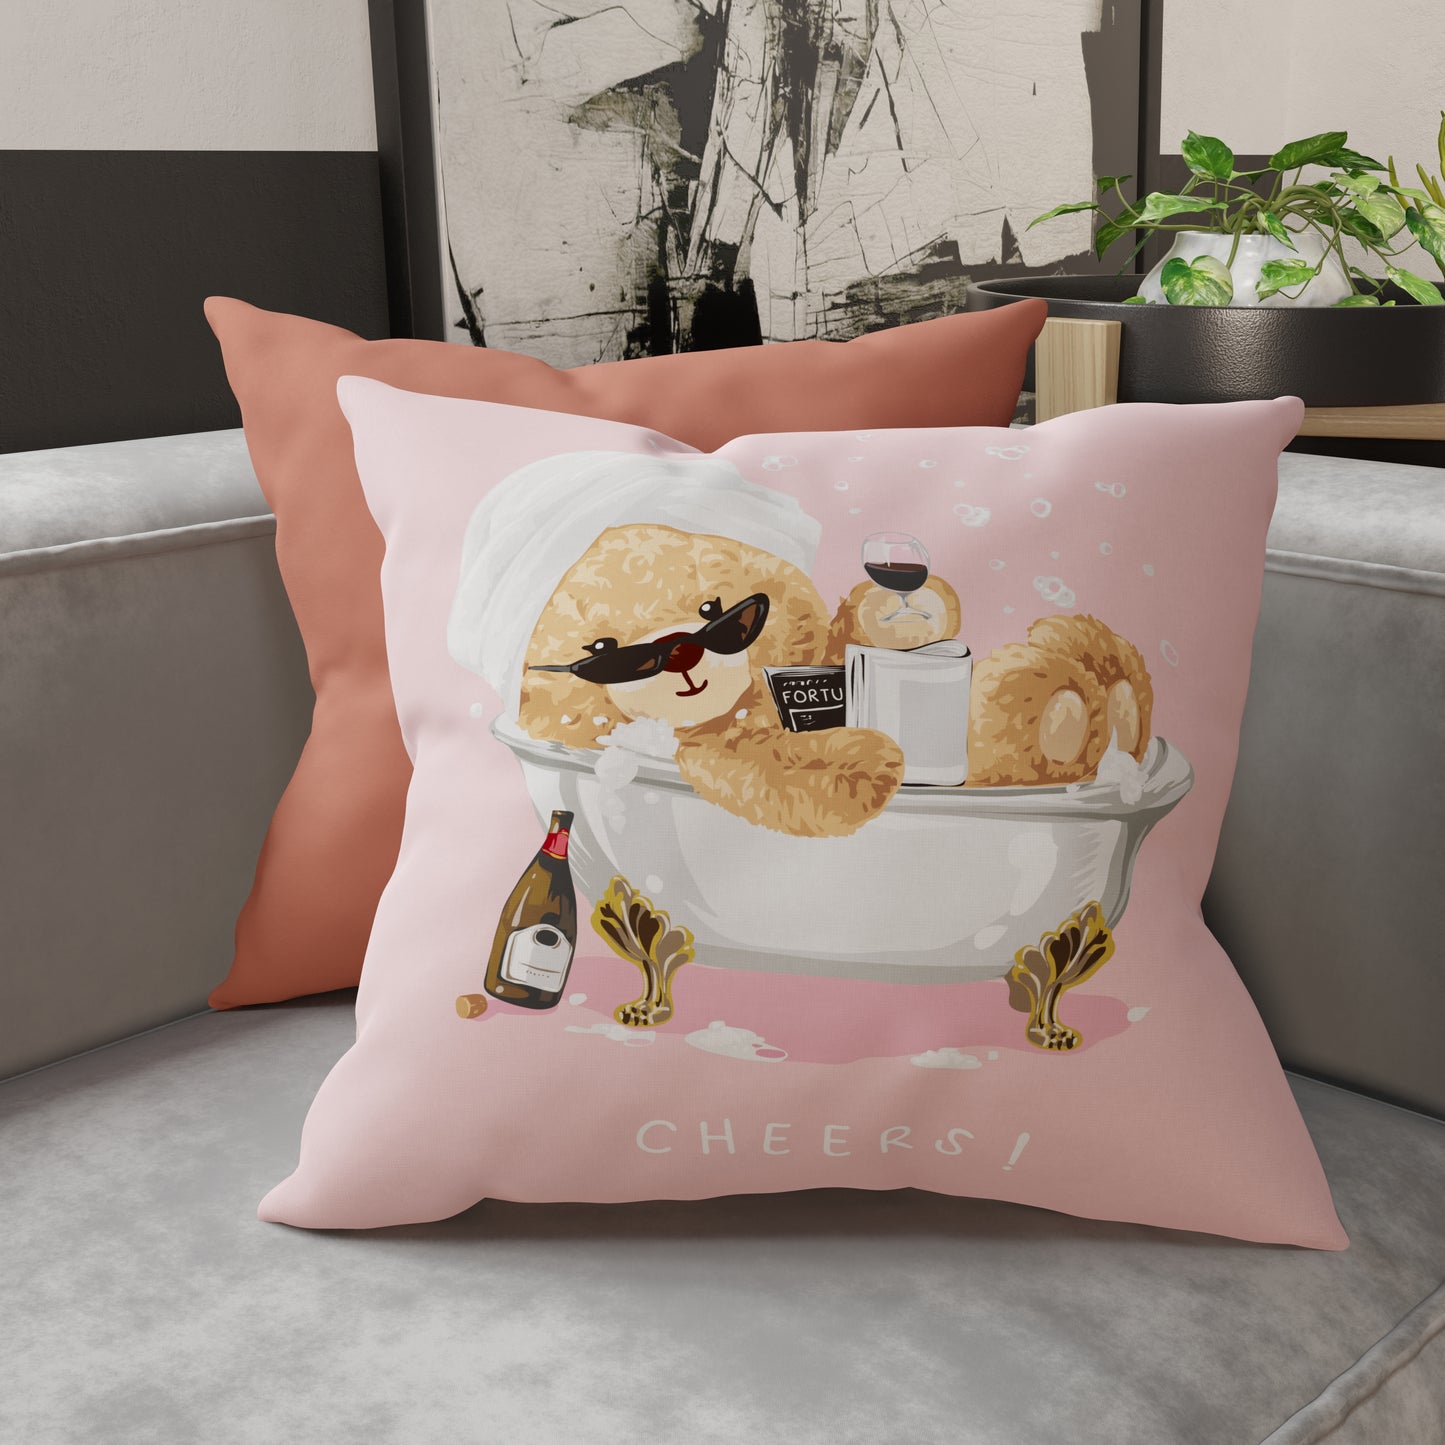 Cushions, Sofa Cushion Covers, Teddy Relax Digitally Printed Furnishing Cushions